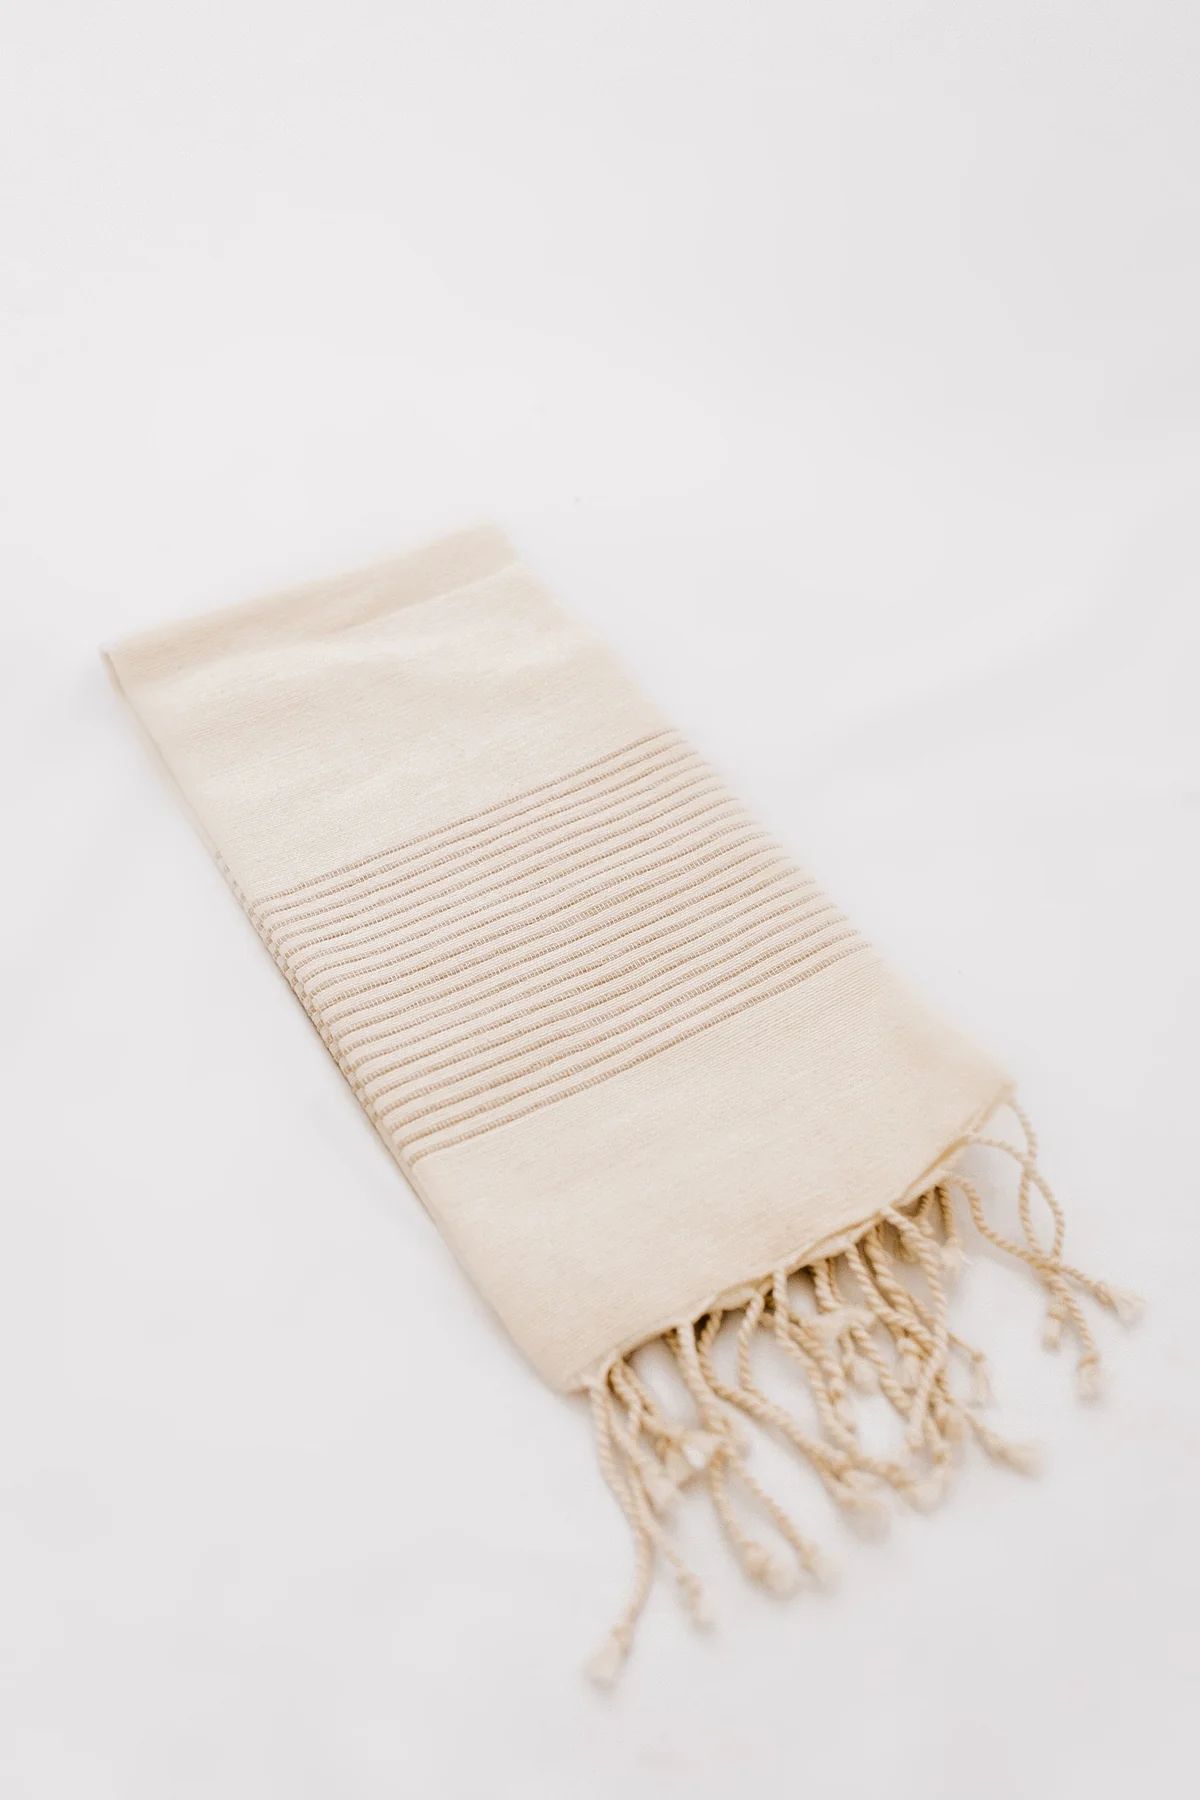 Alfie Fringed Stripe Tea Towel | THELIFESTYLEDCO